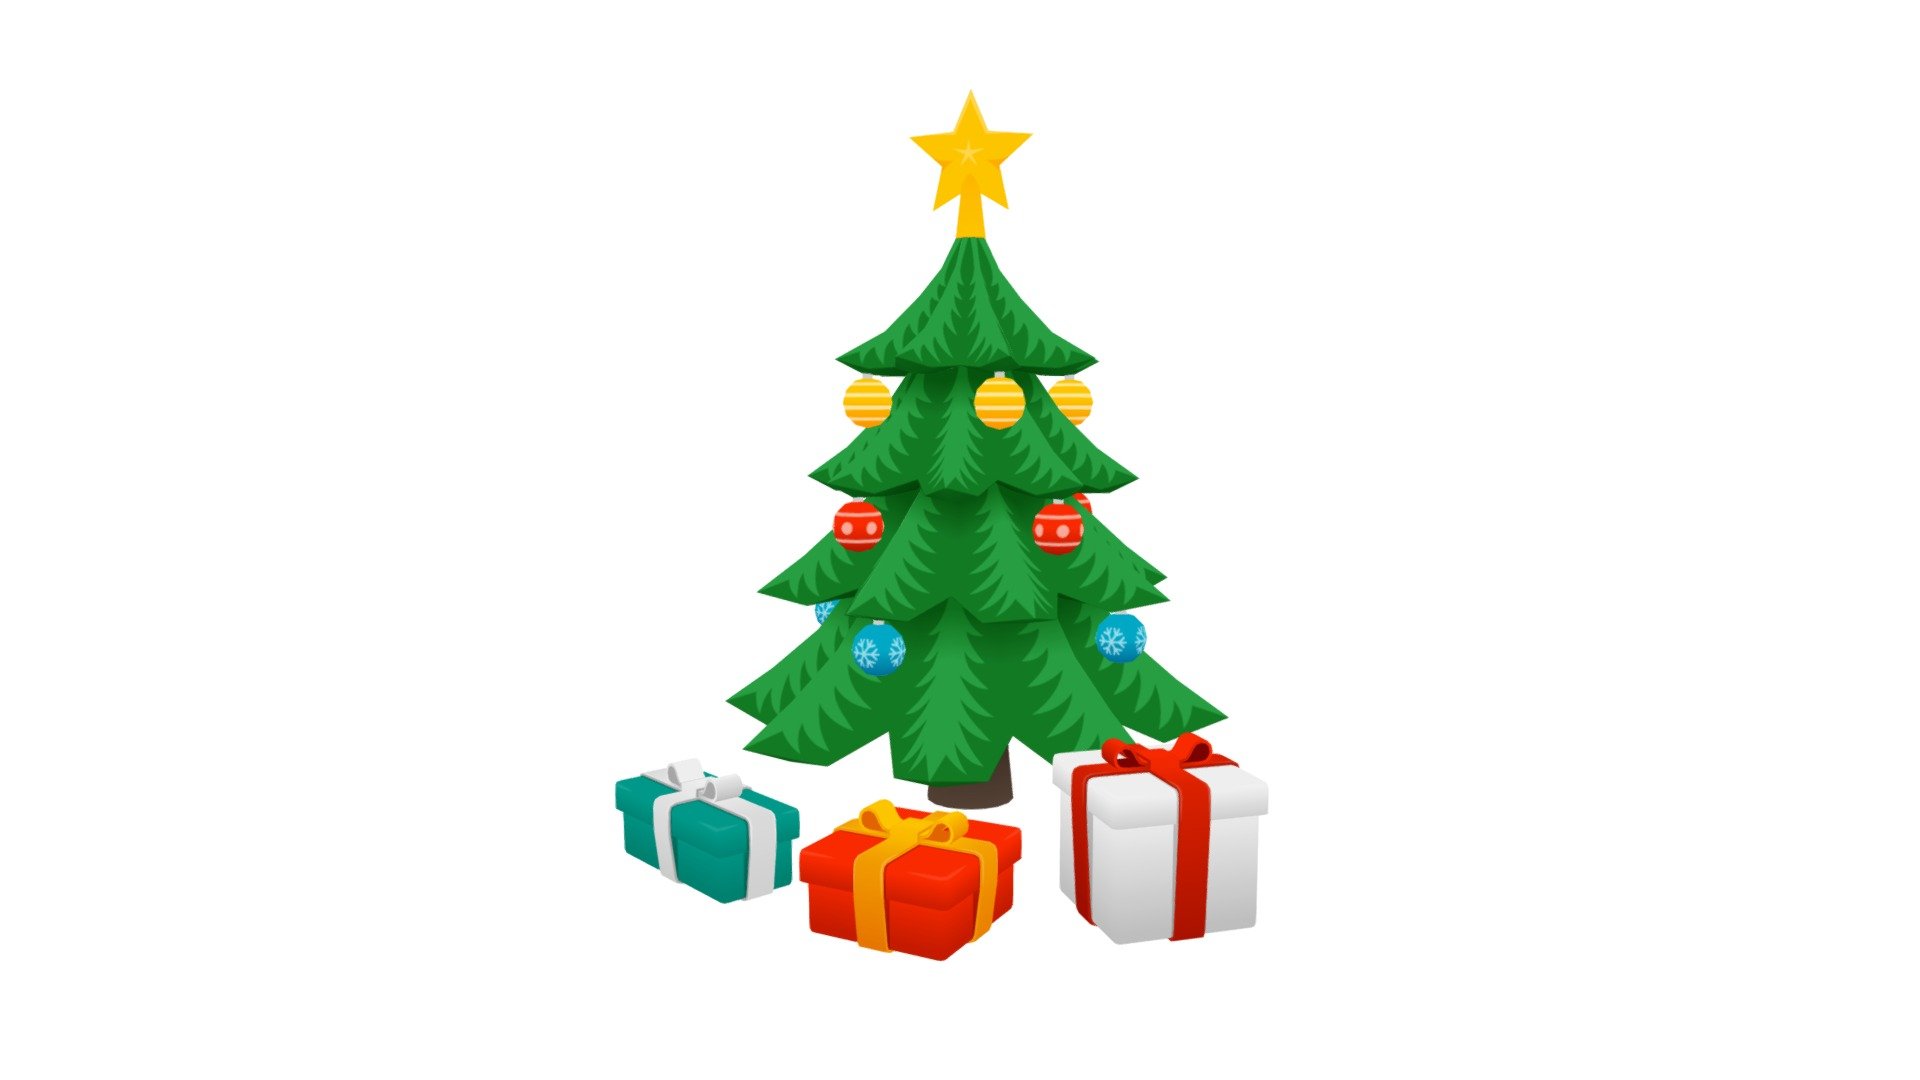 Low Poly Christmas Tree.
Files: .c4d, .fbx, .obj, .mtl, + textures 3d model